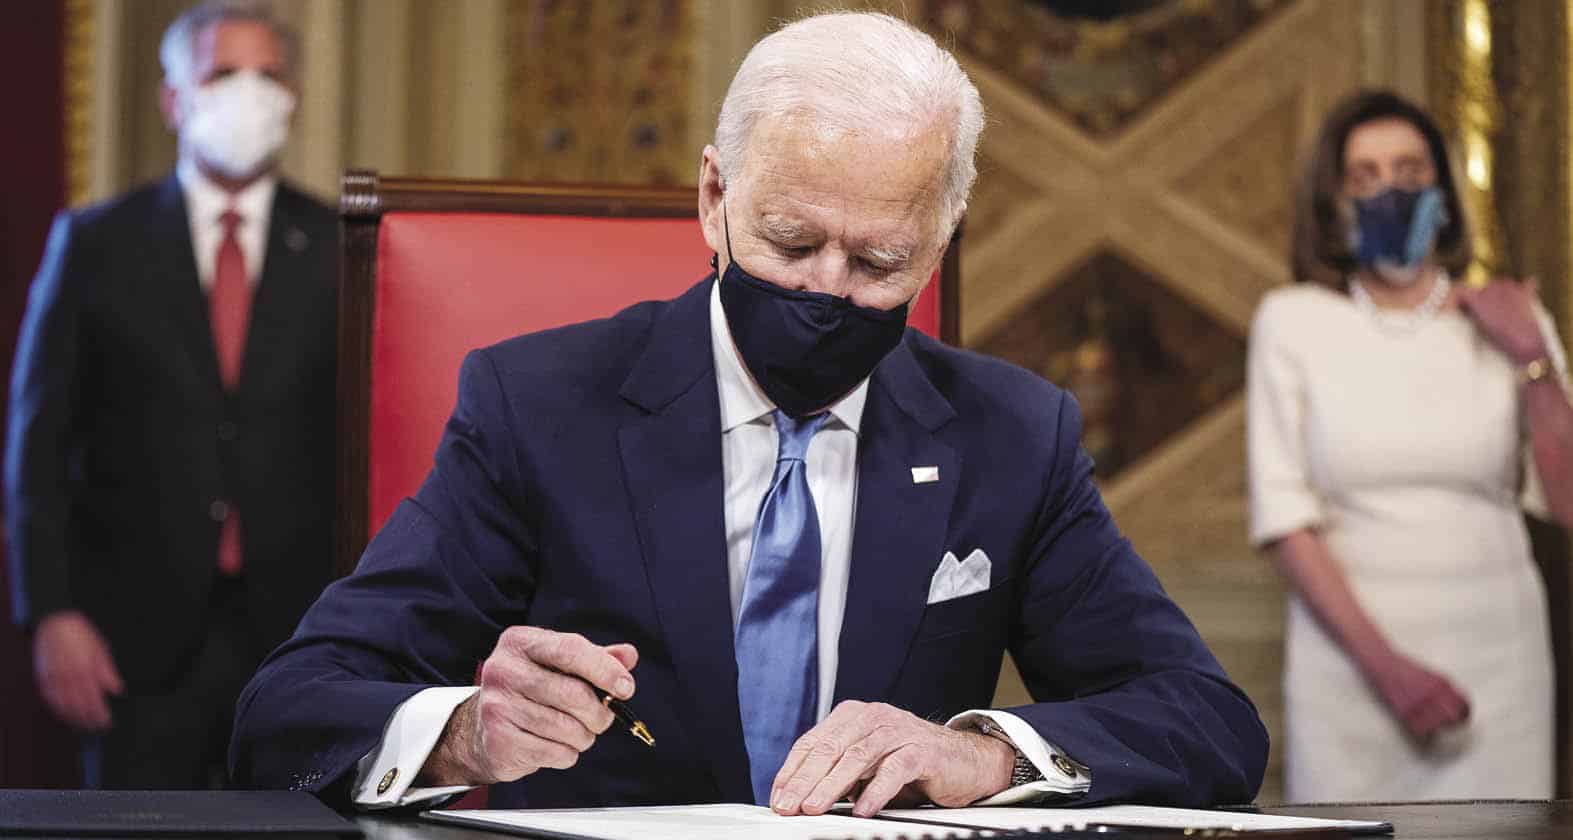 President Biden signing document